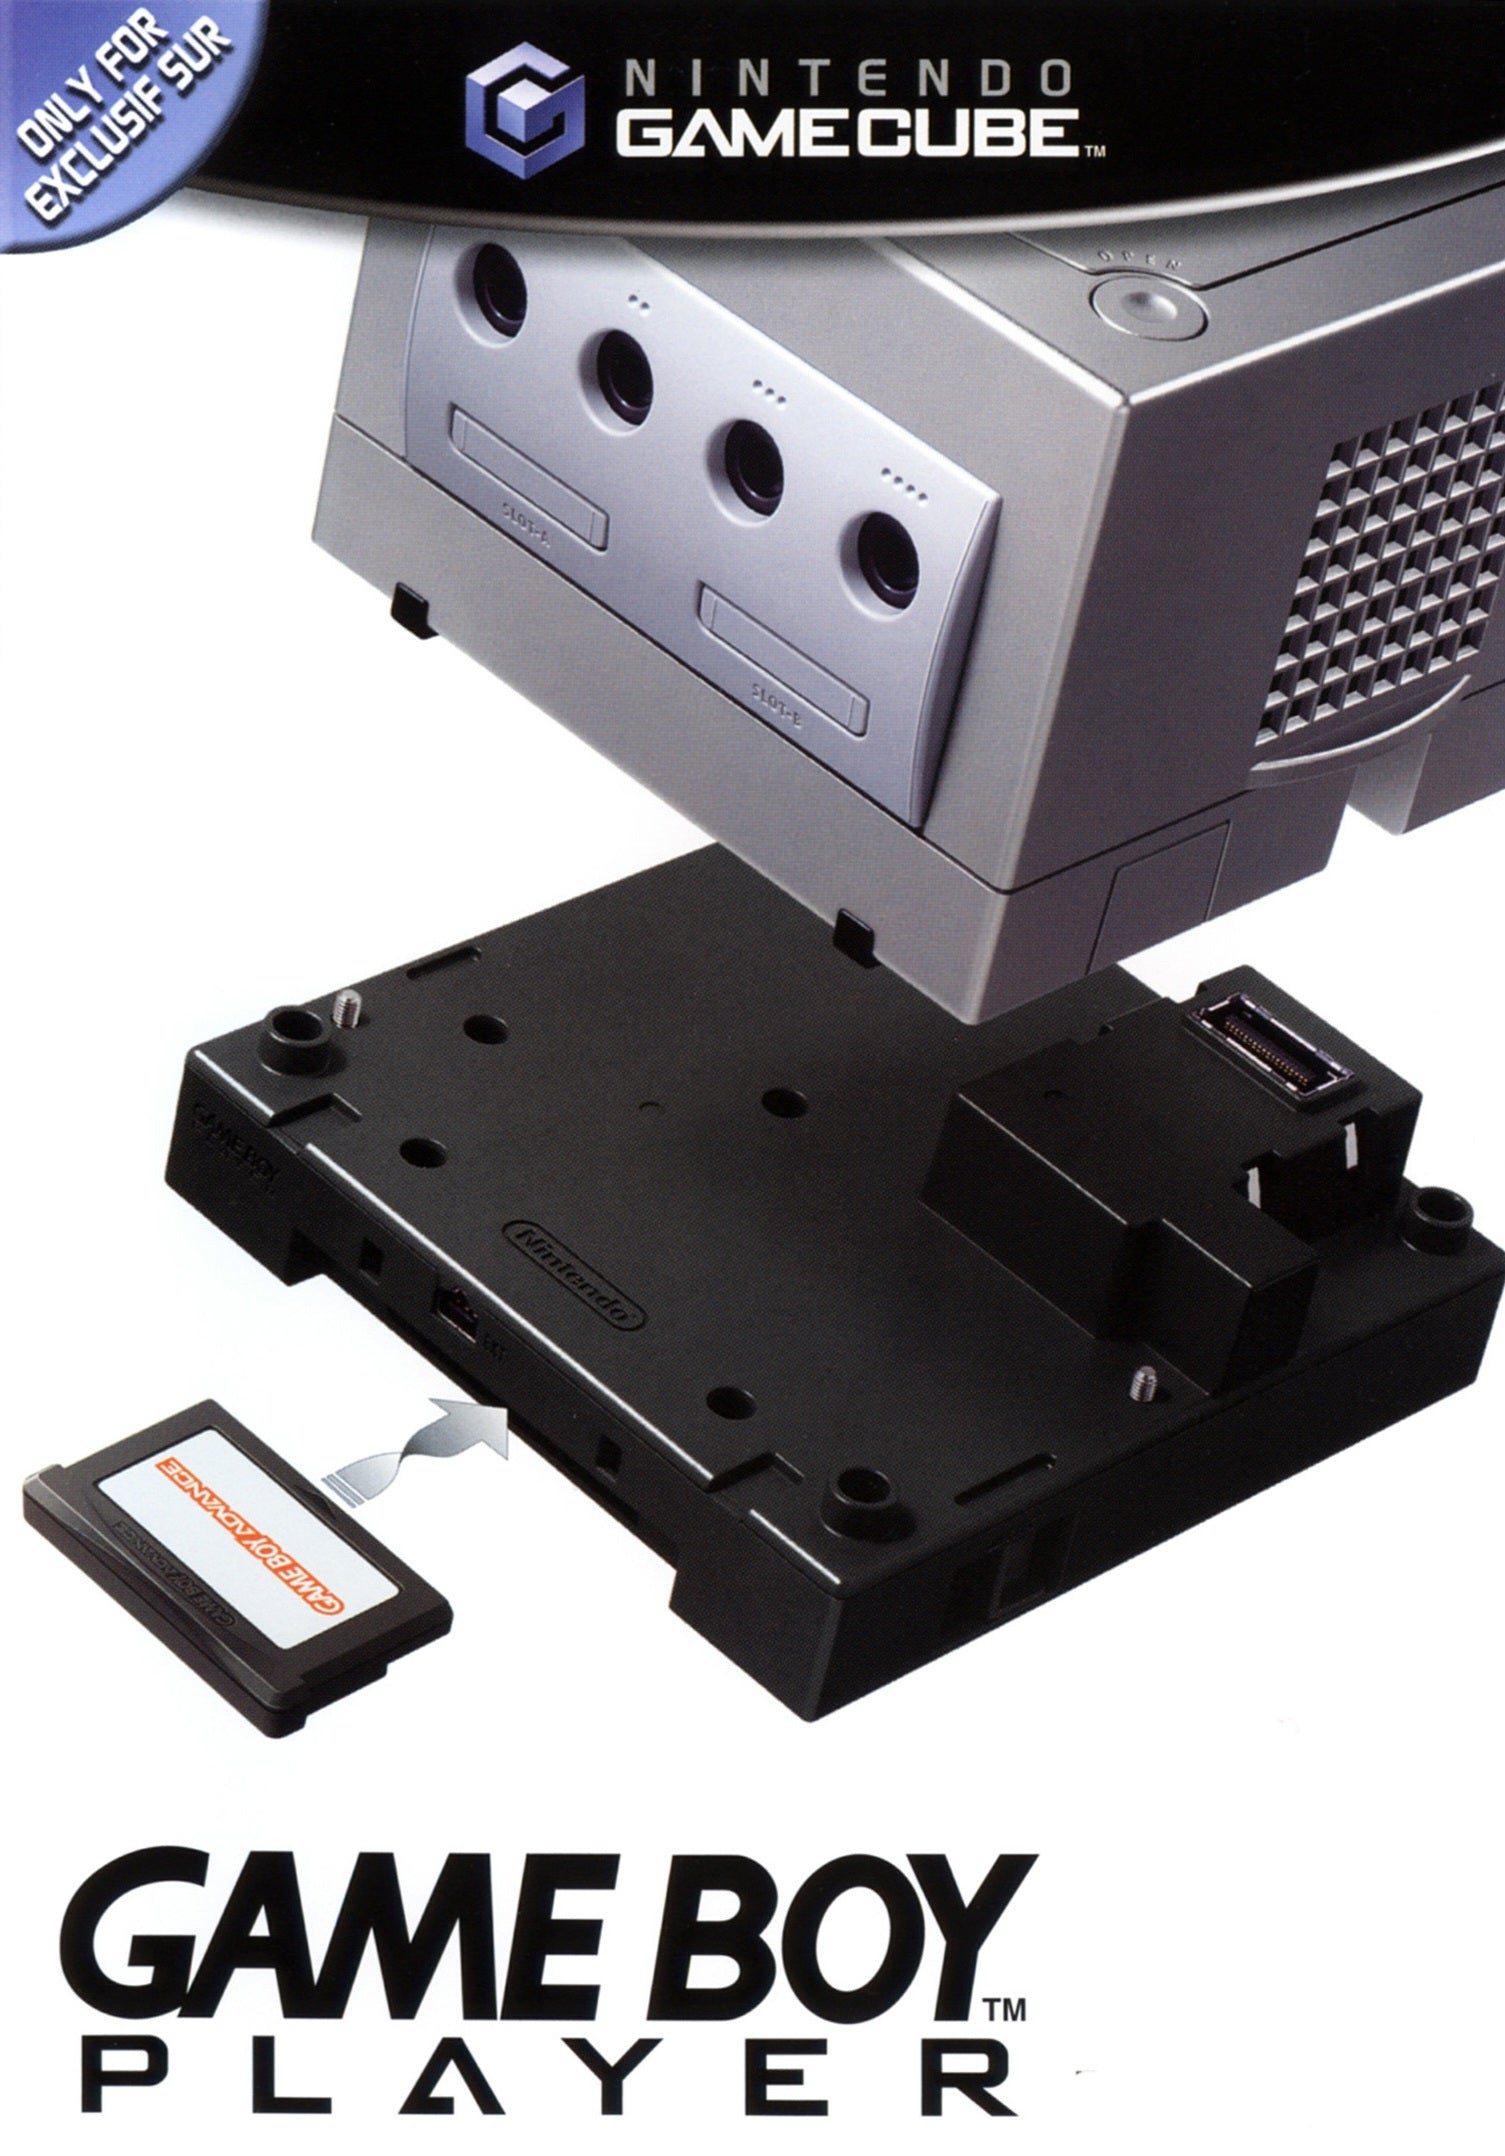 Nintendo GameCube Game Boy Player